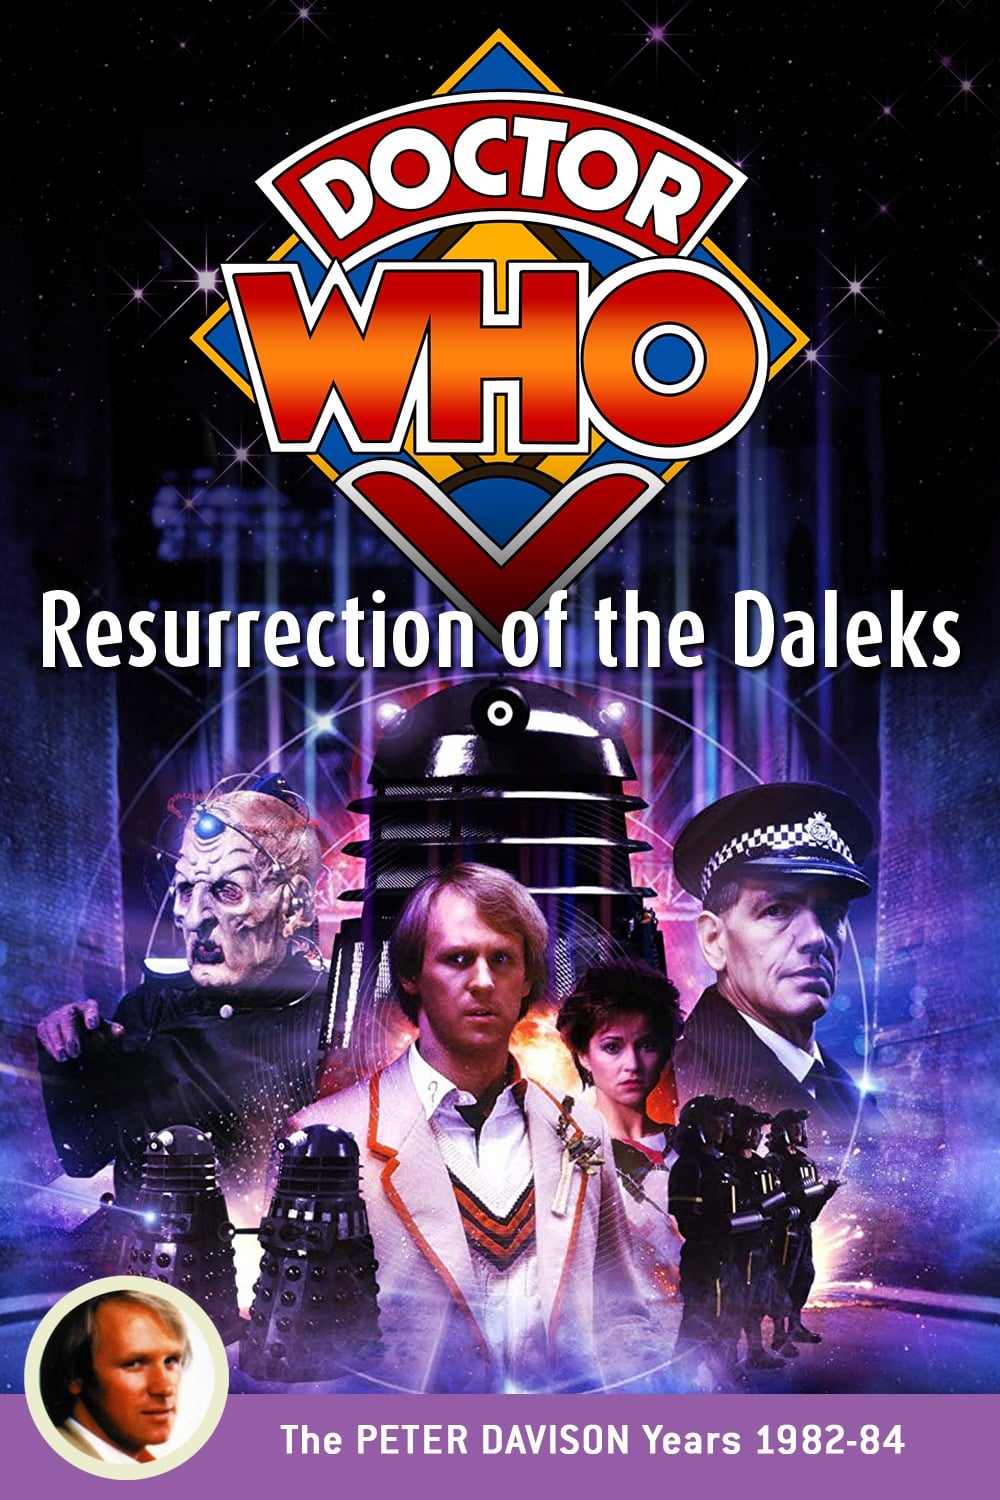 Doctor Who: Resurrection of the Daleks (1984)